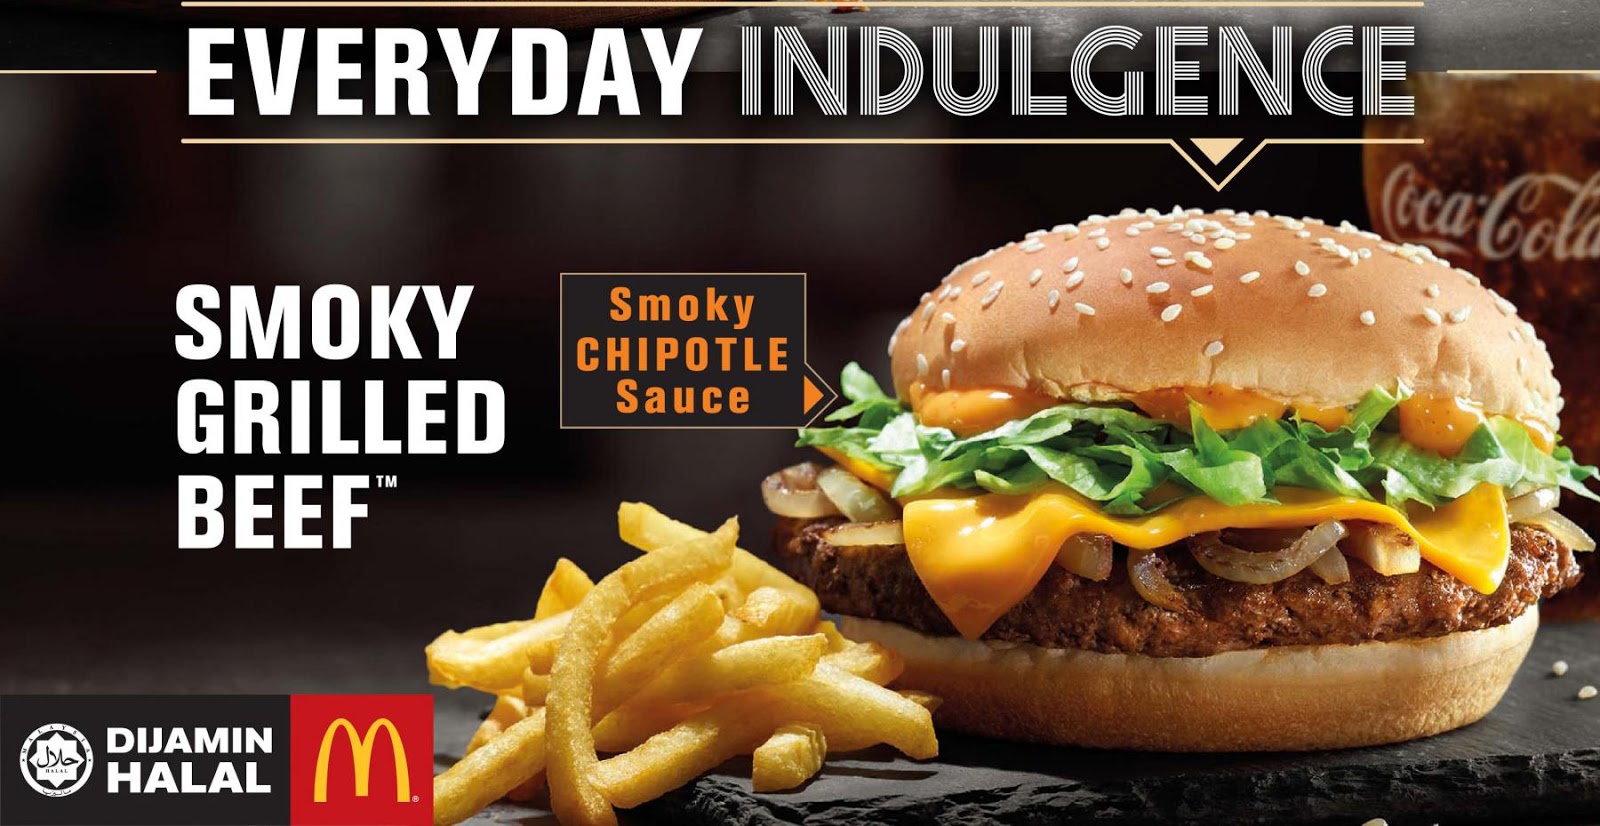 Harga Smoky Grilled Beef Burger Mcd - Senarai Harga 